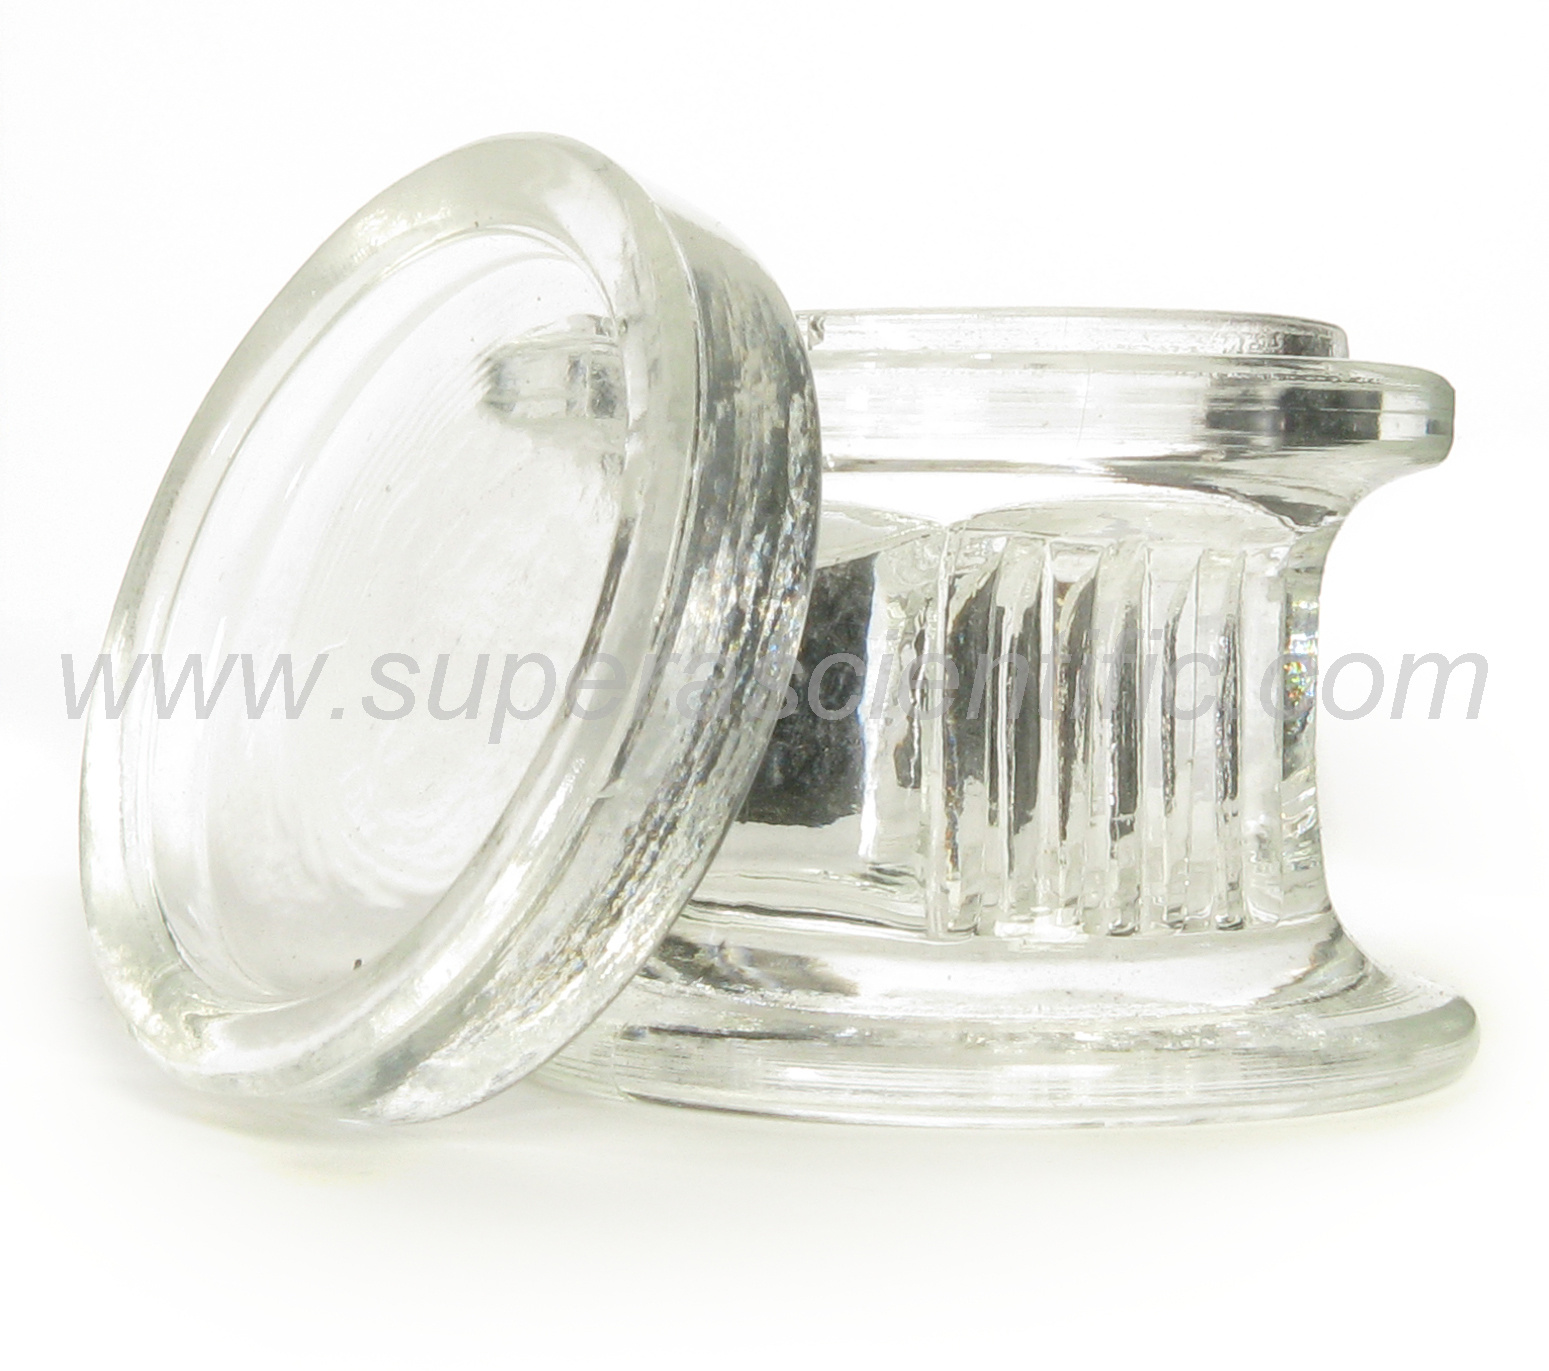 200-011  Glass Staining Jar for Cover Slips